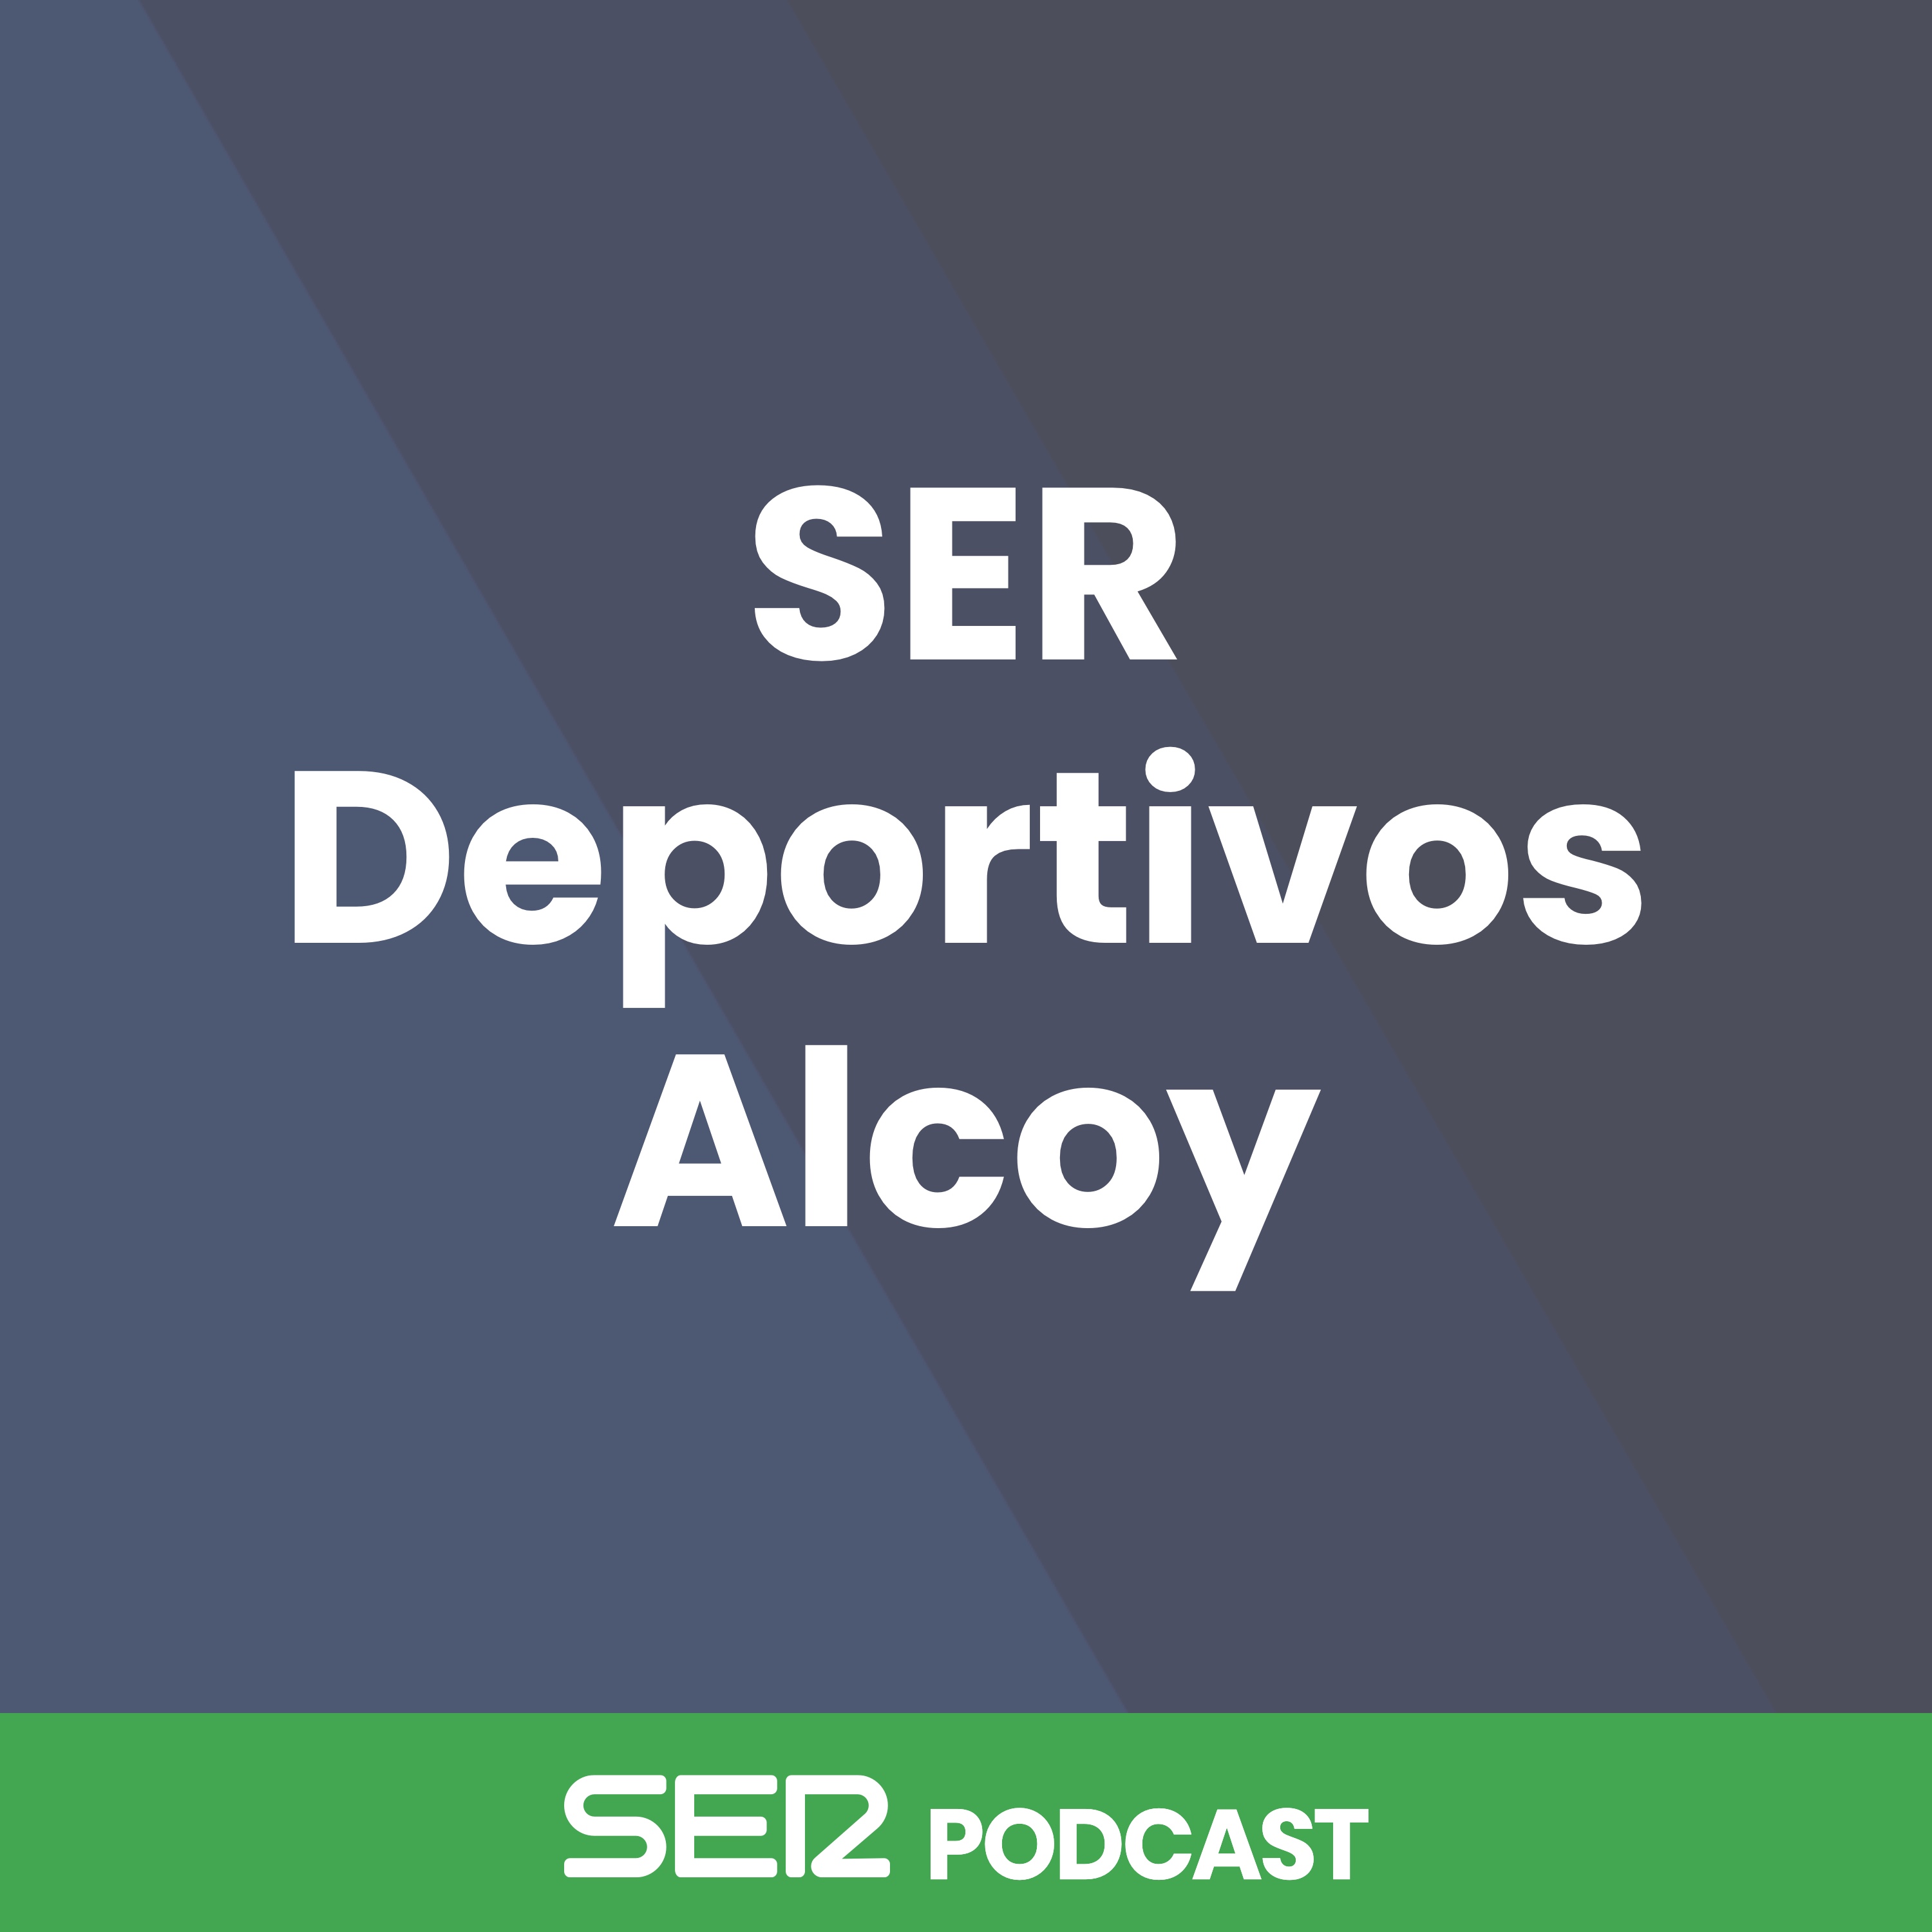 SER Deportivos Alcoy